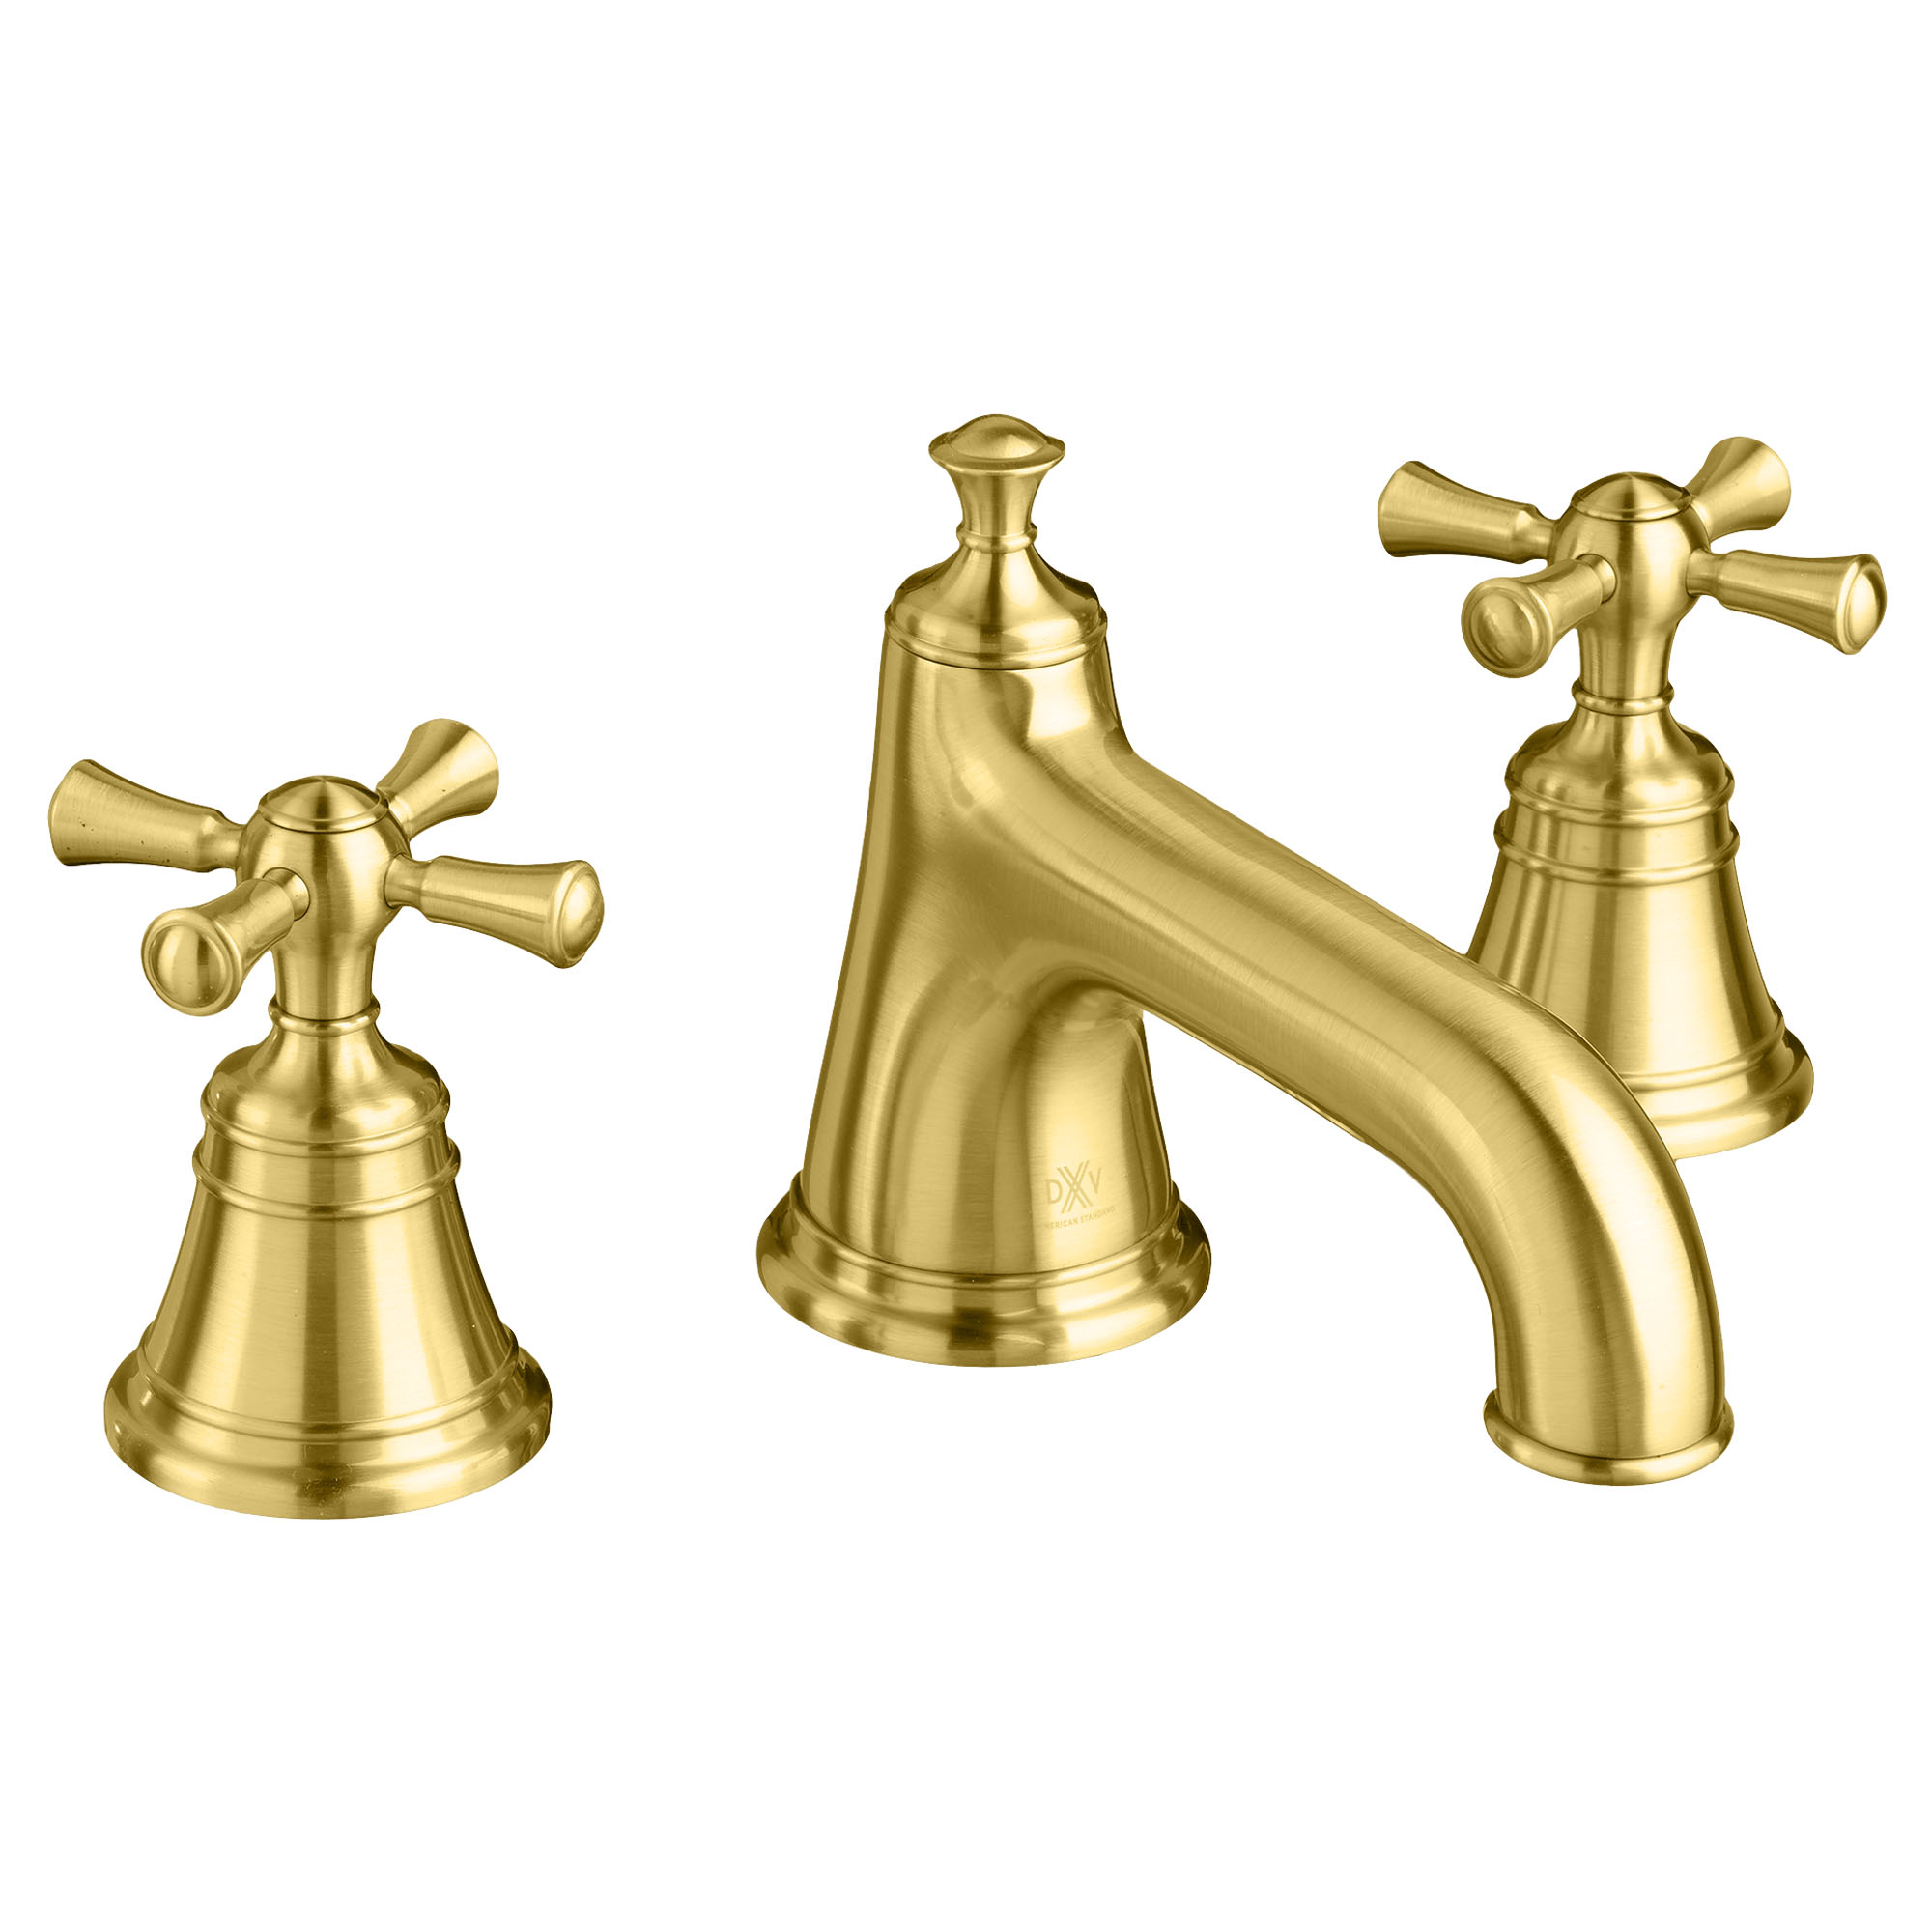 Randall® 2-Handle Widespread Bathroom Faucet with Cross Handles